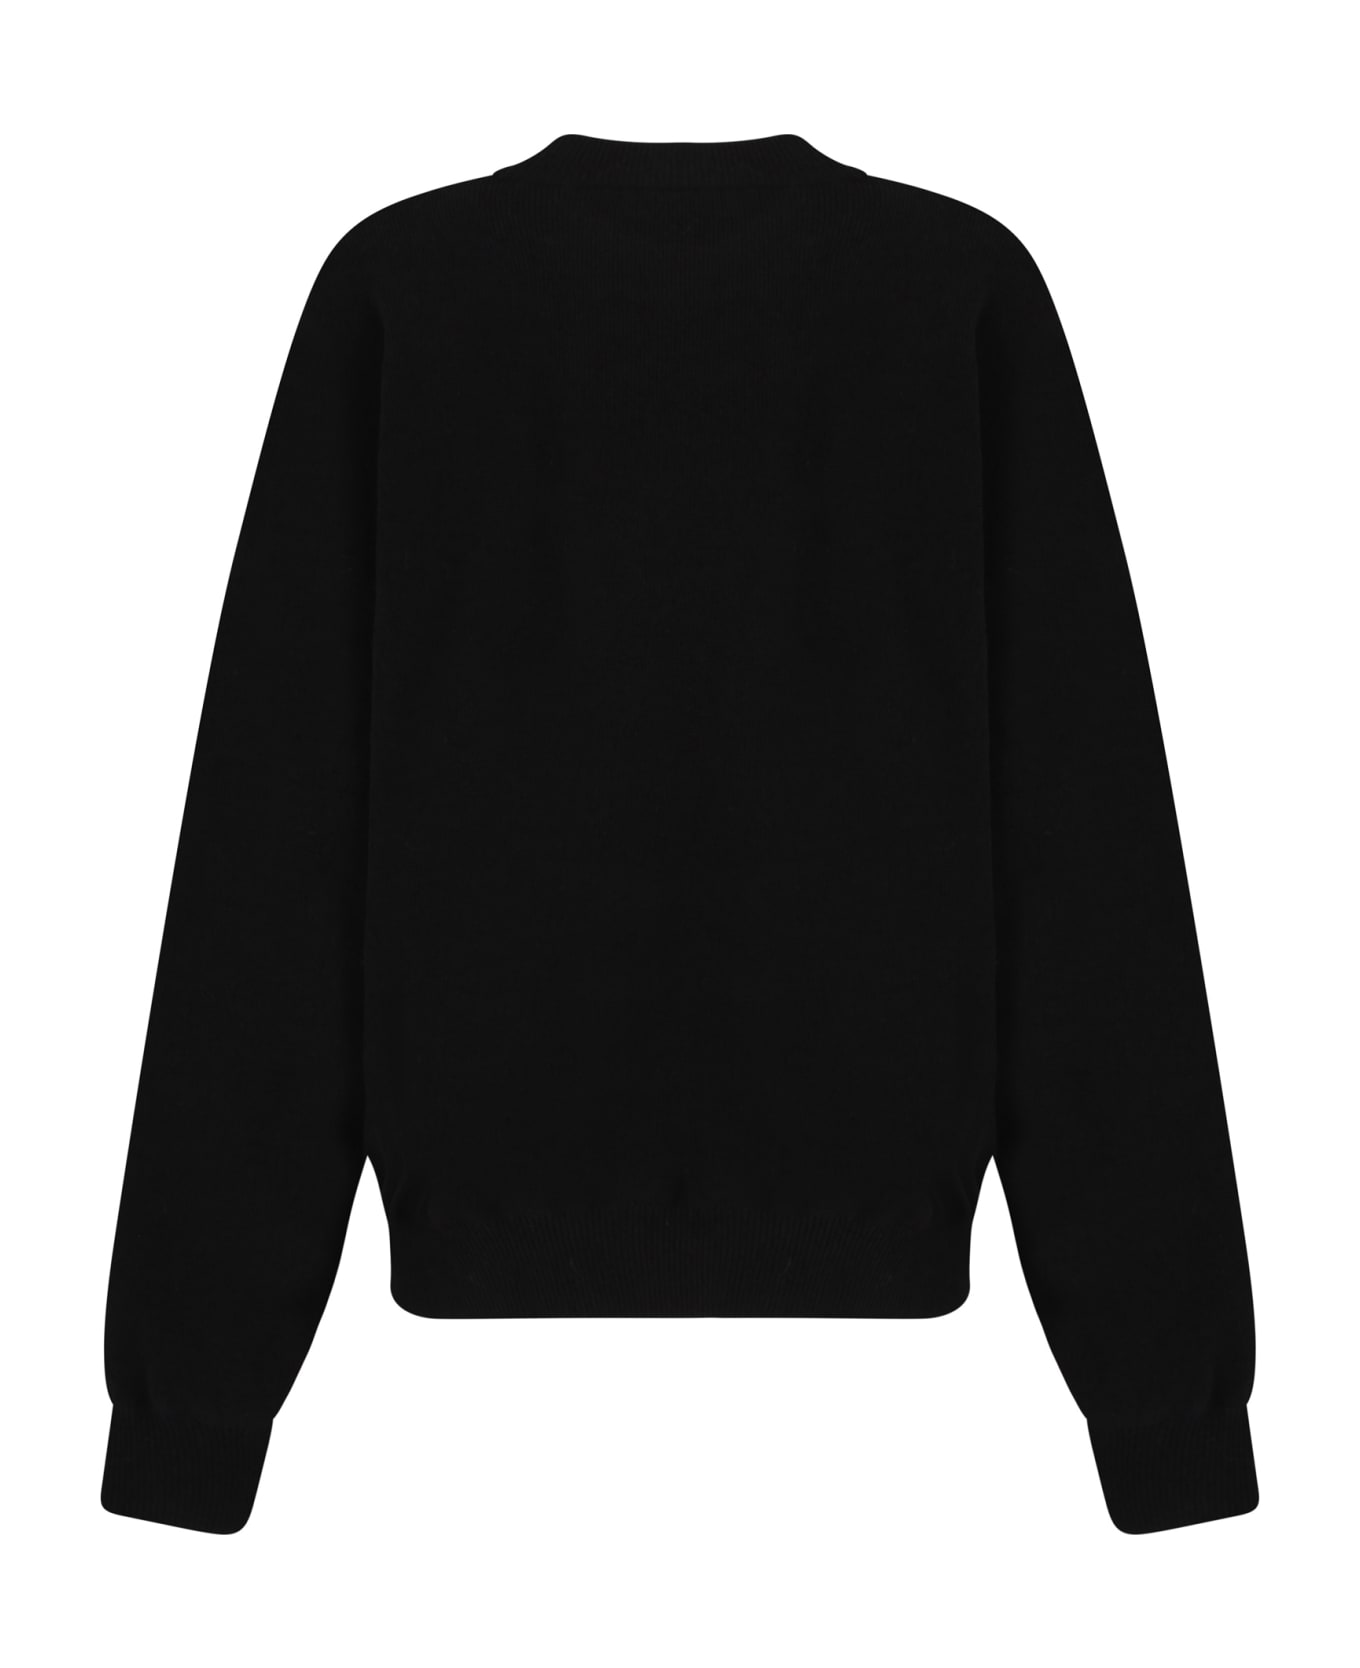 Alexander Wang Sweater - Black